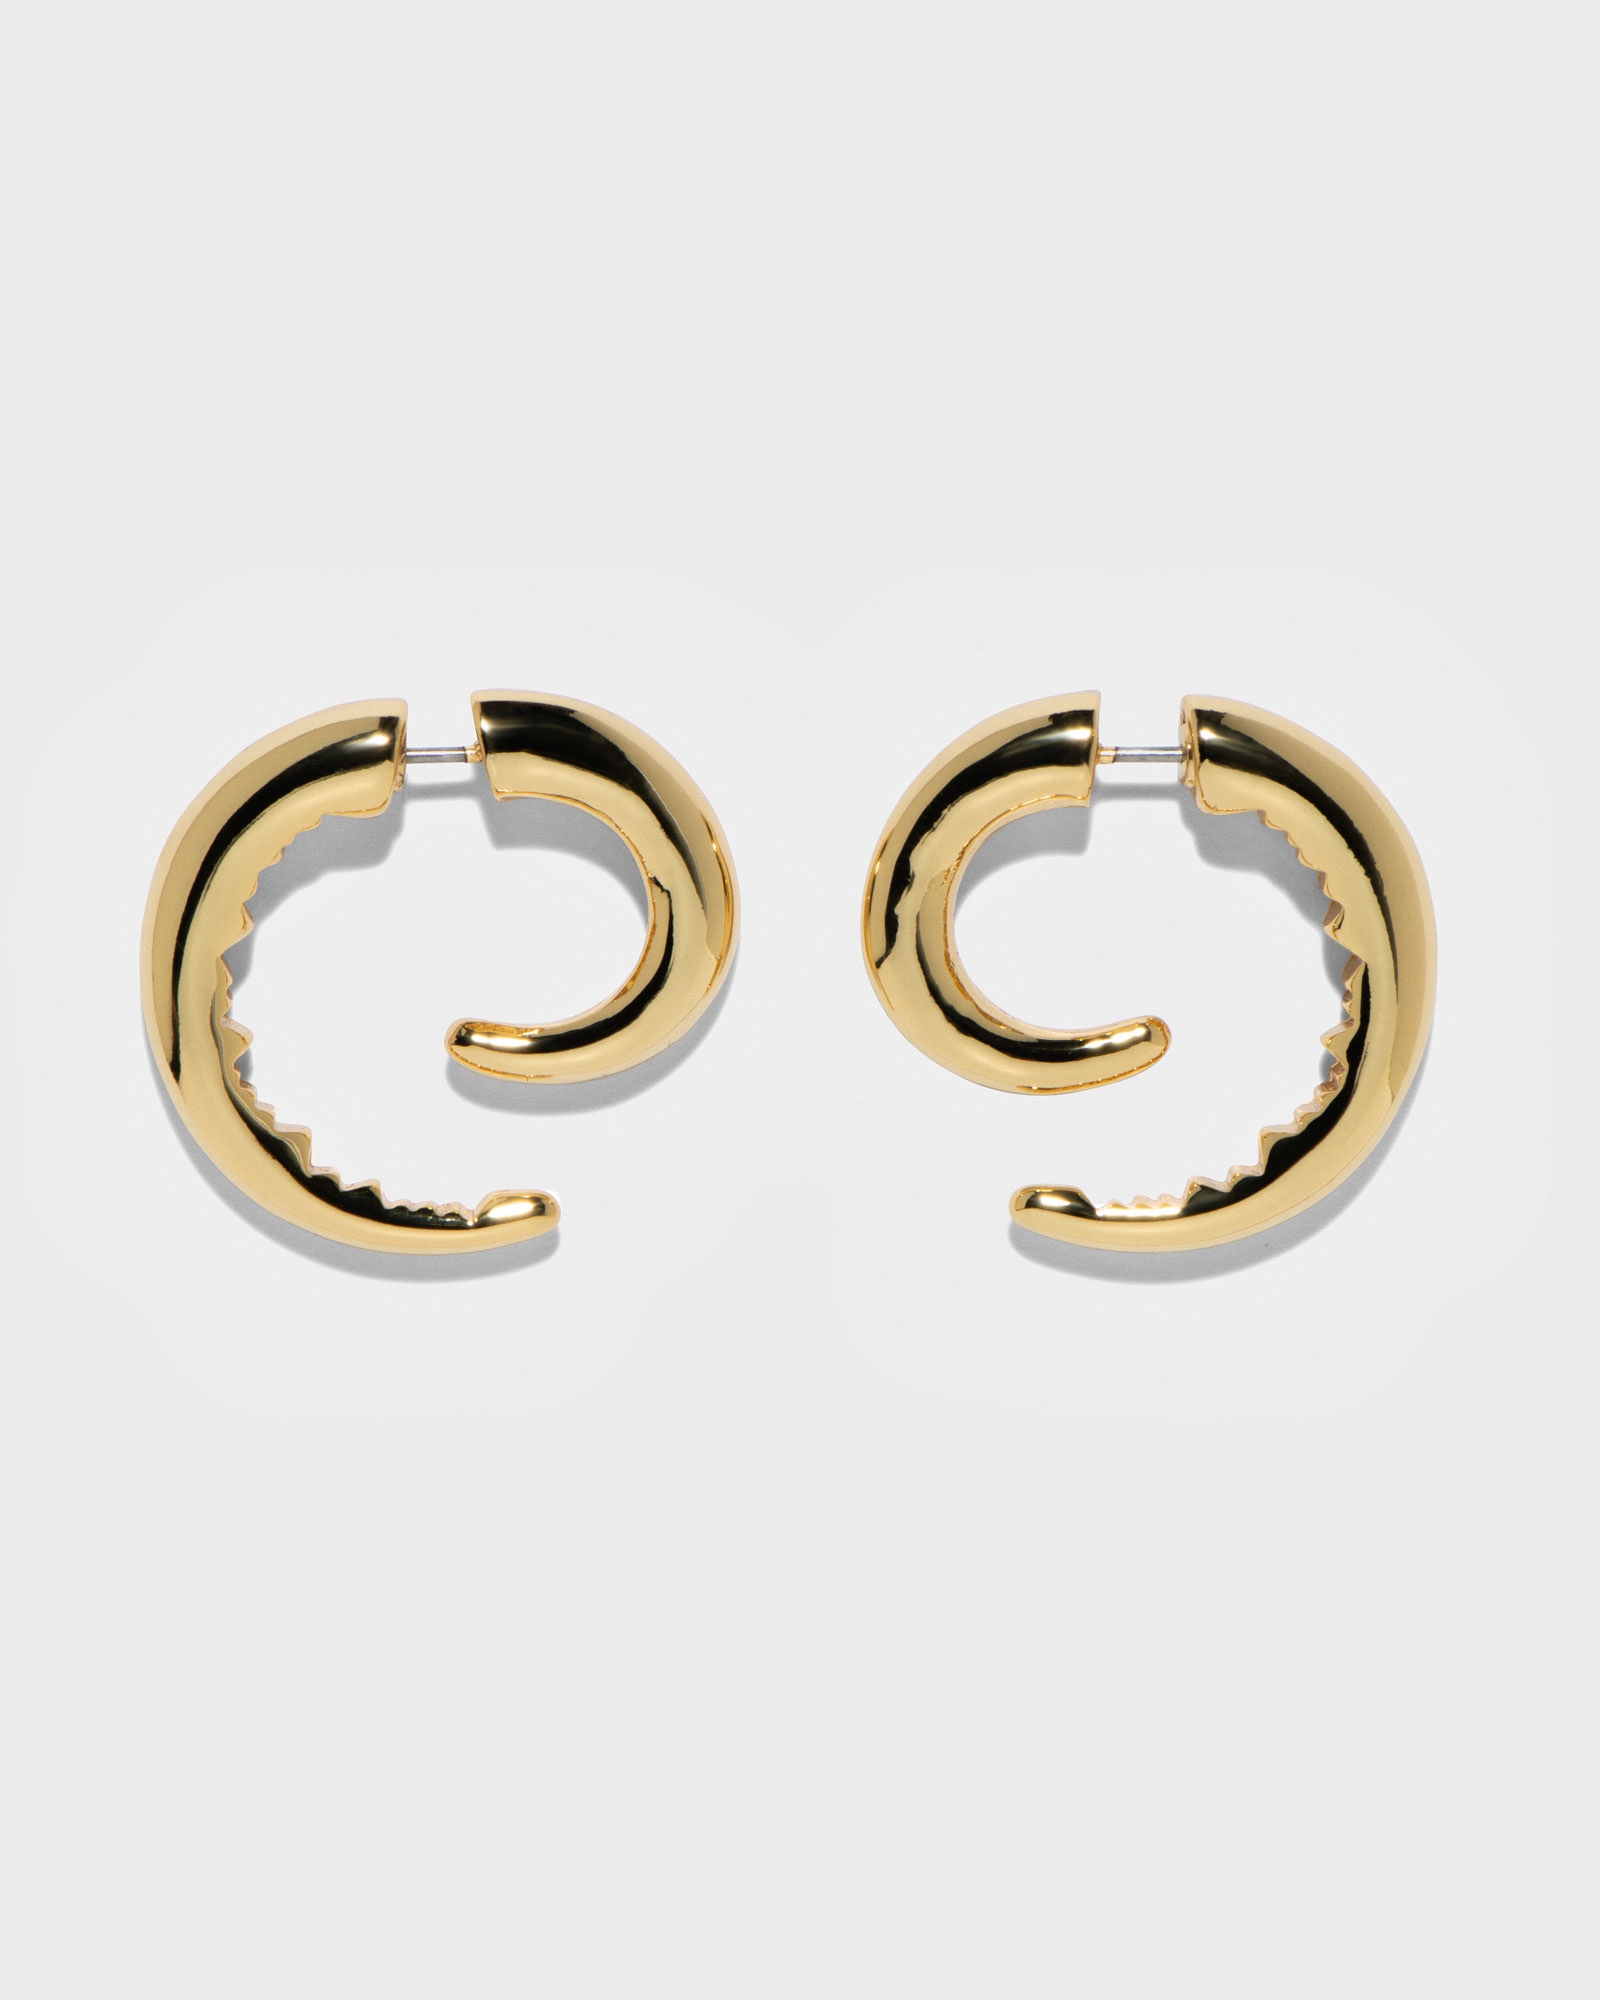 Accessories | Two Part Textured Metal Hoop | 160 Gold